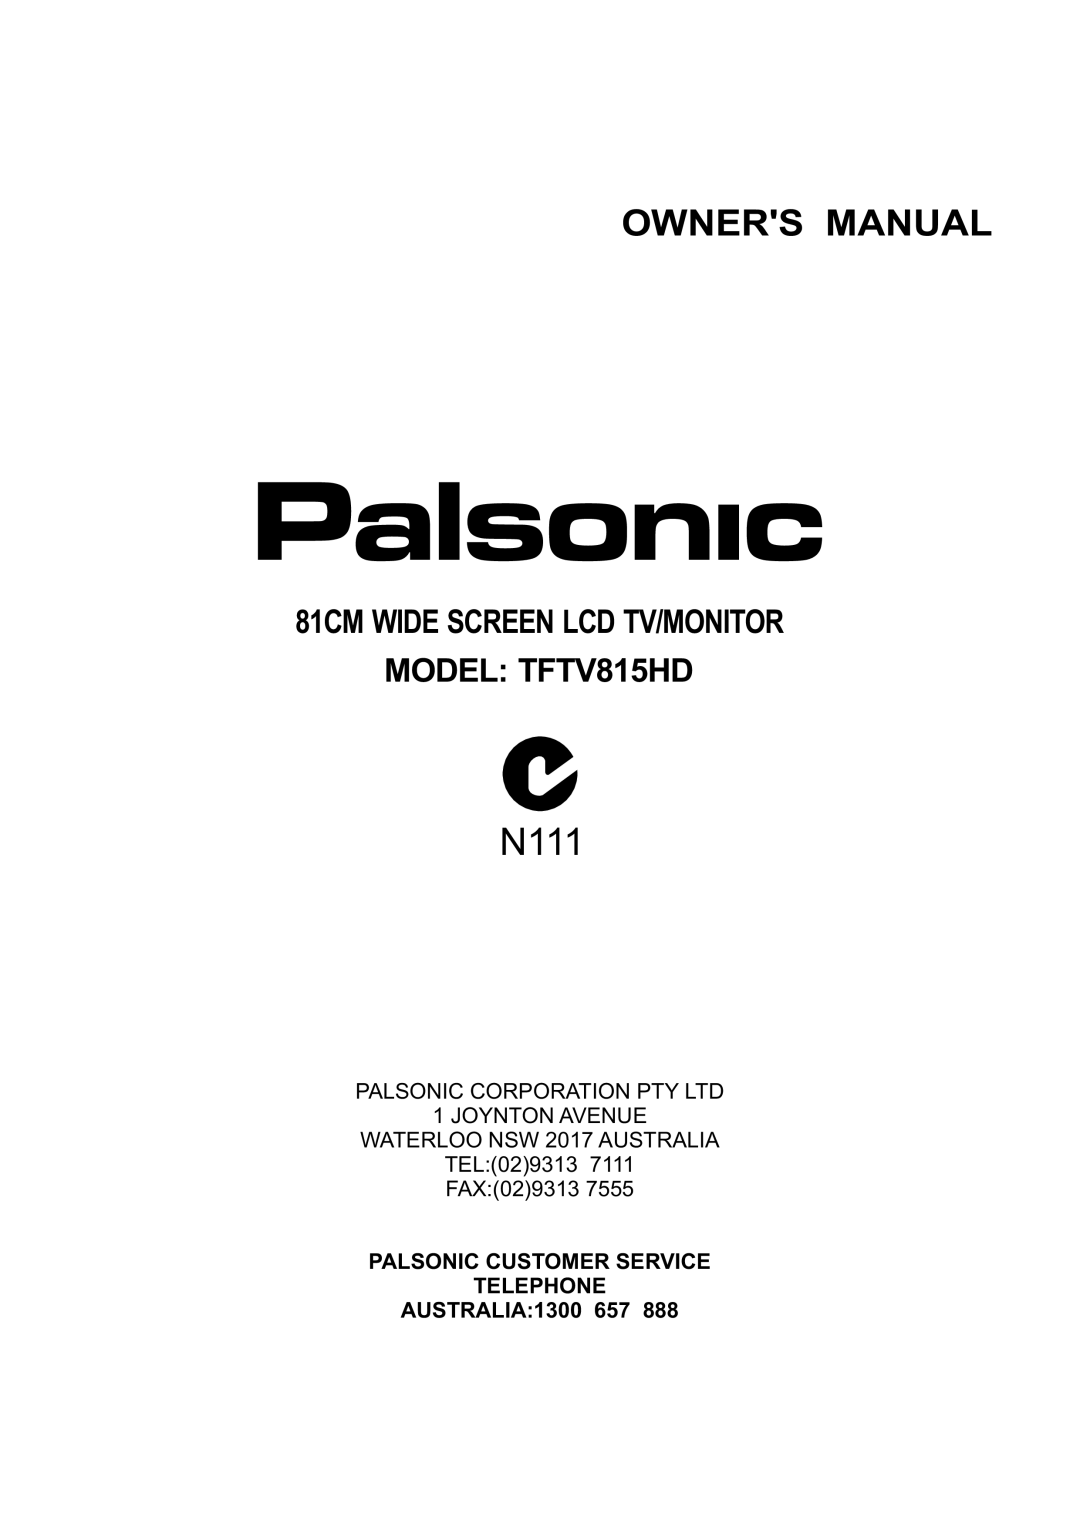 Palsonic owner manual 81CM WIDE SCREEN LCD TV/MONITOR MODEL TFTV815HD, N111, Owners Manual 